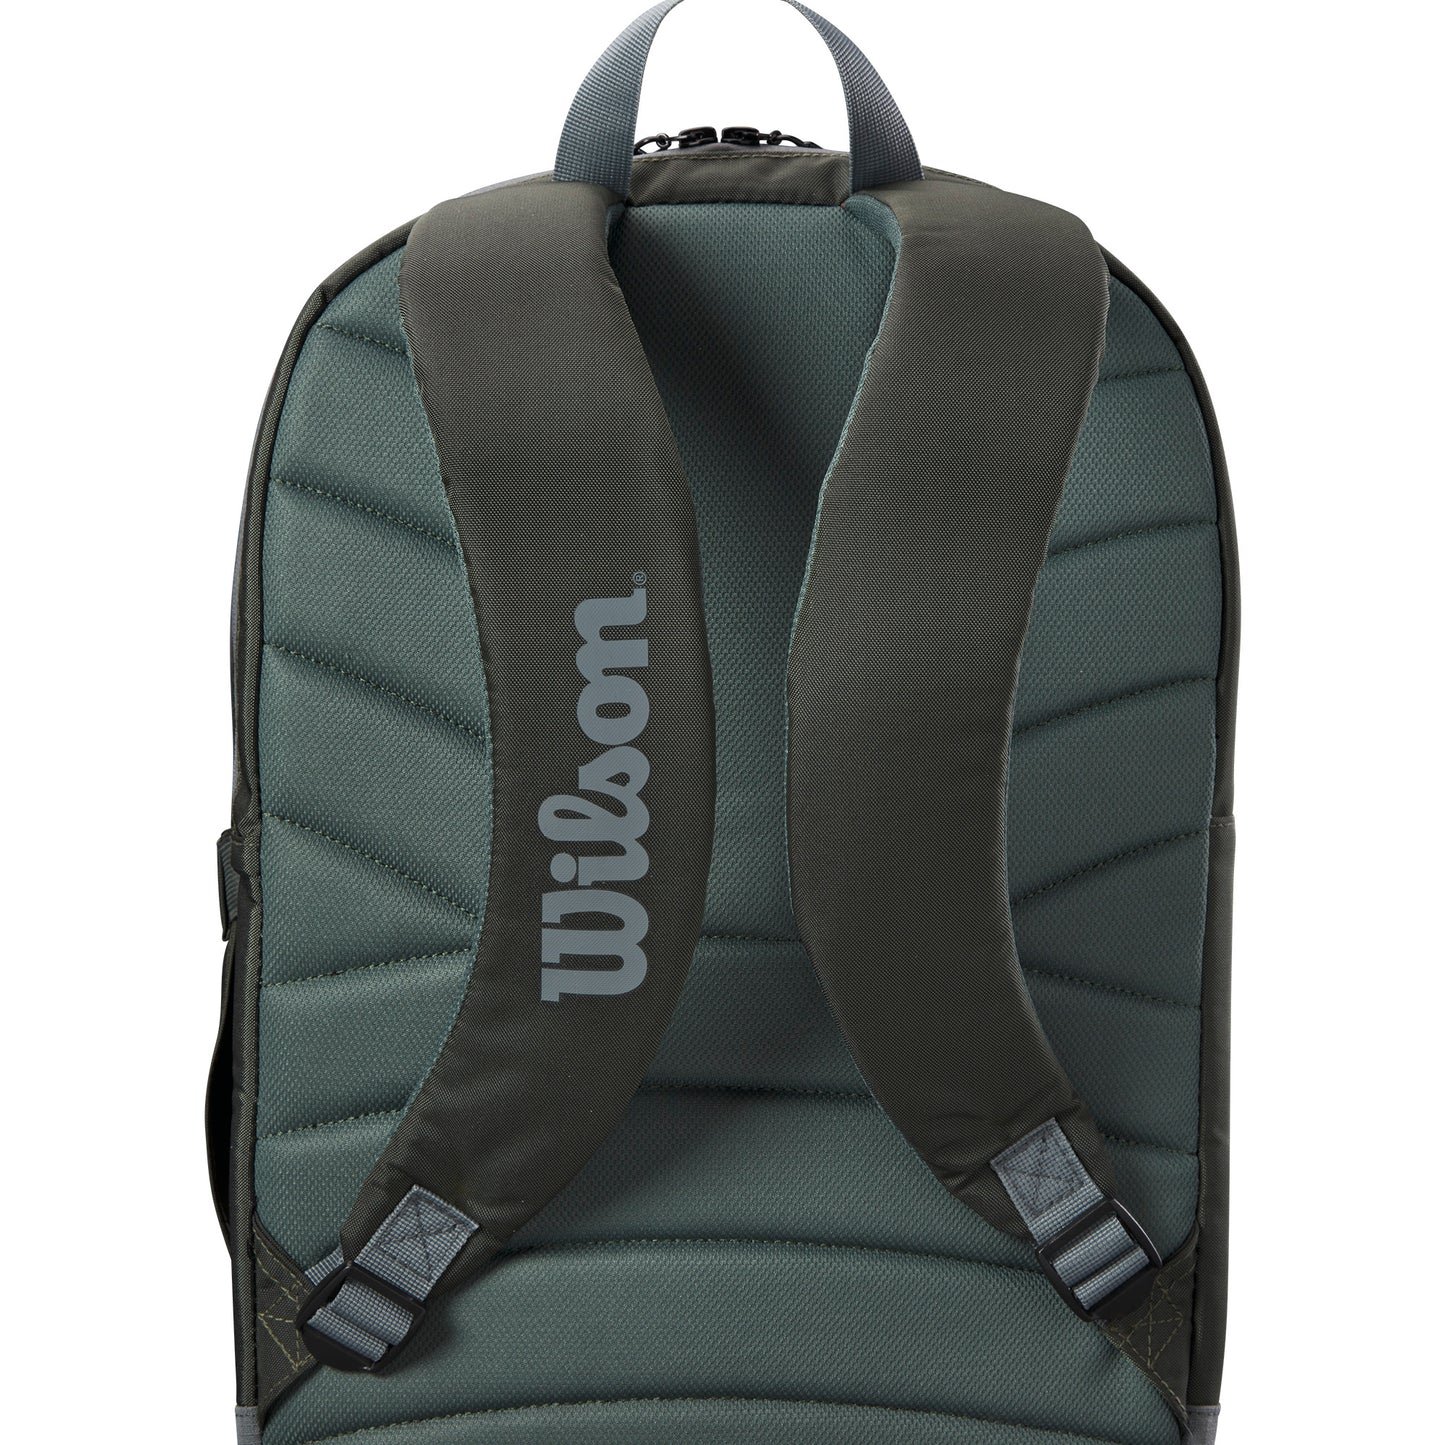 Wilson Tour backpack tennis bag - Green